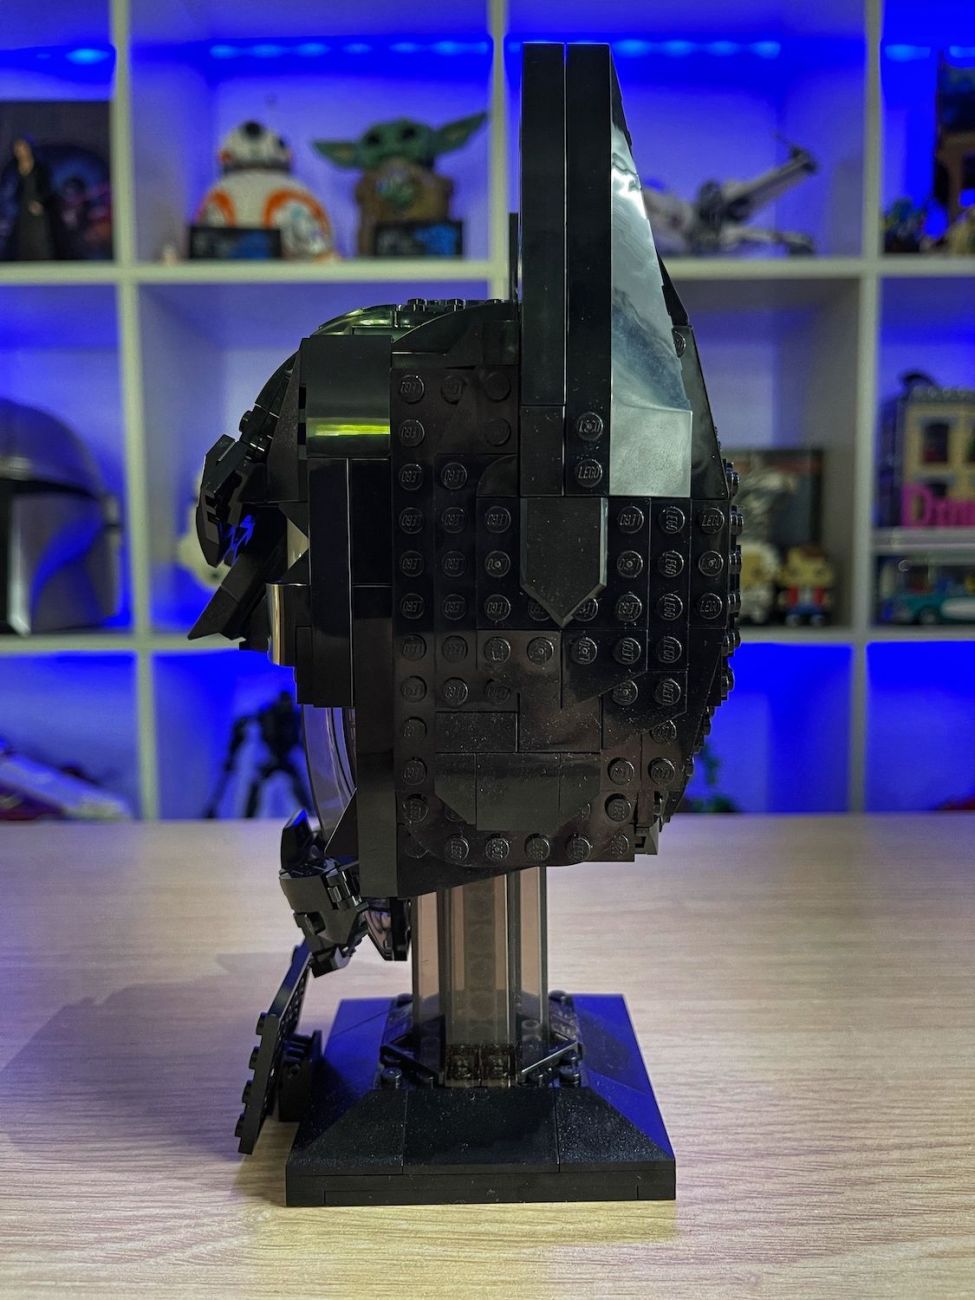 LEGO 76182 Batman Helm